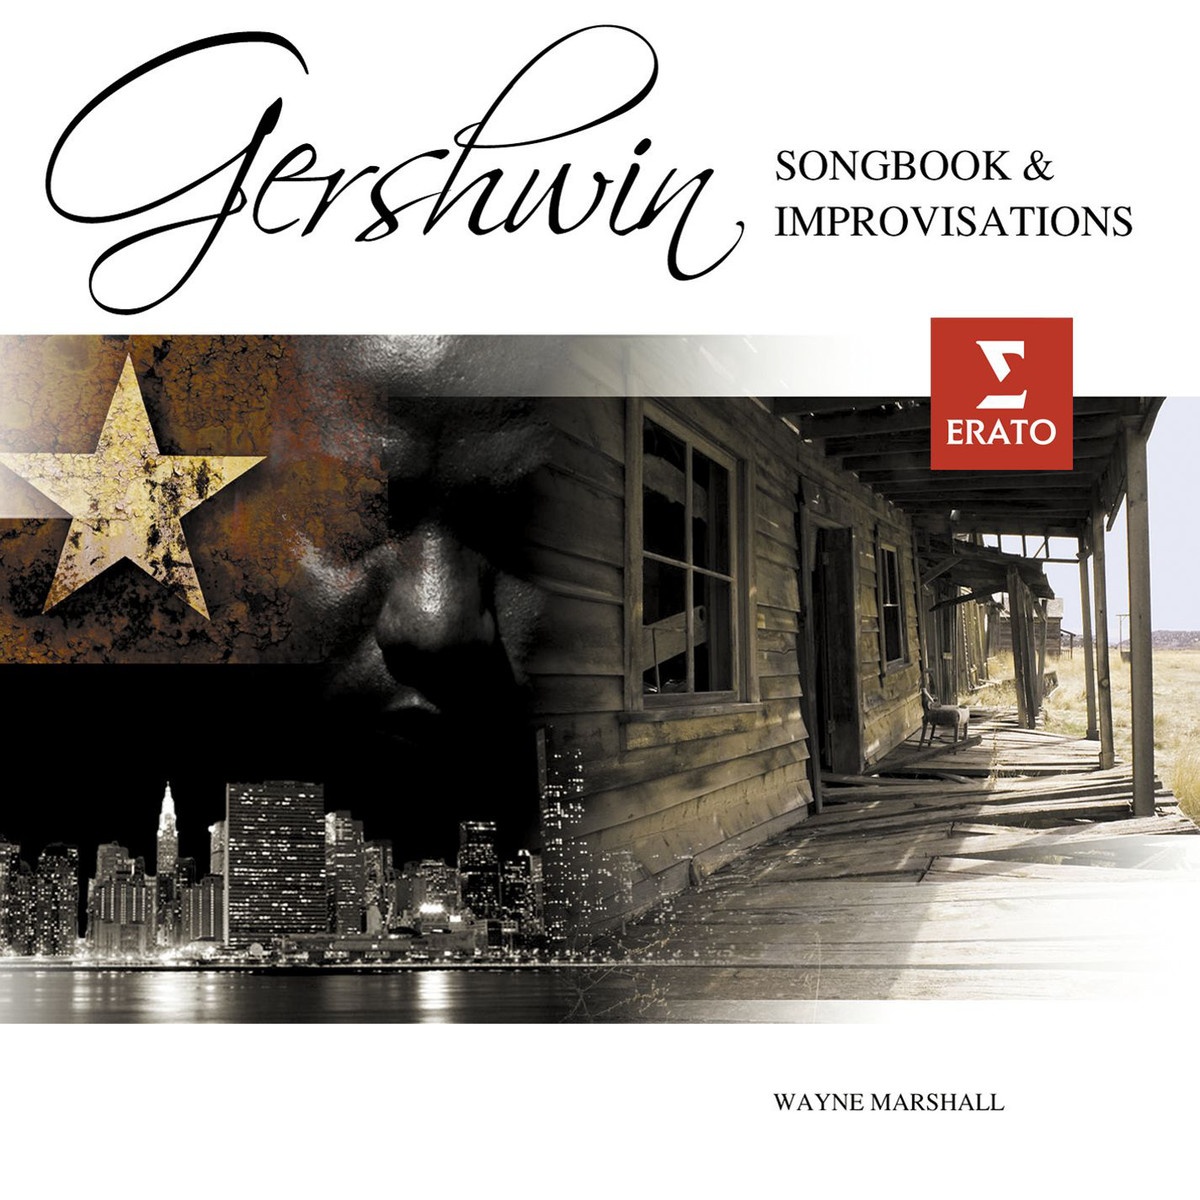 A Gershwin Songbook: improvisations on songs by George Gershwin: I got rhythm (Girl Crazy)